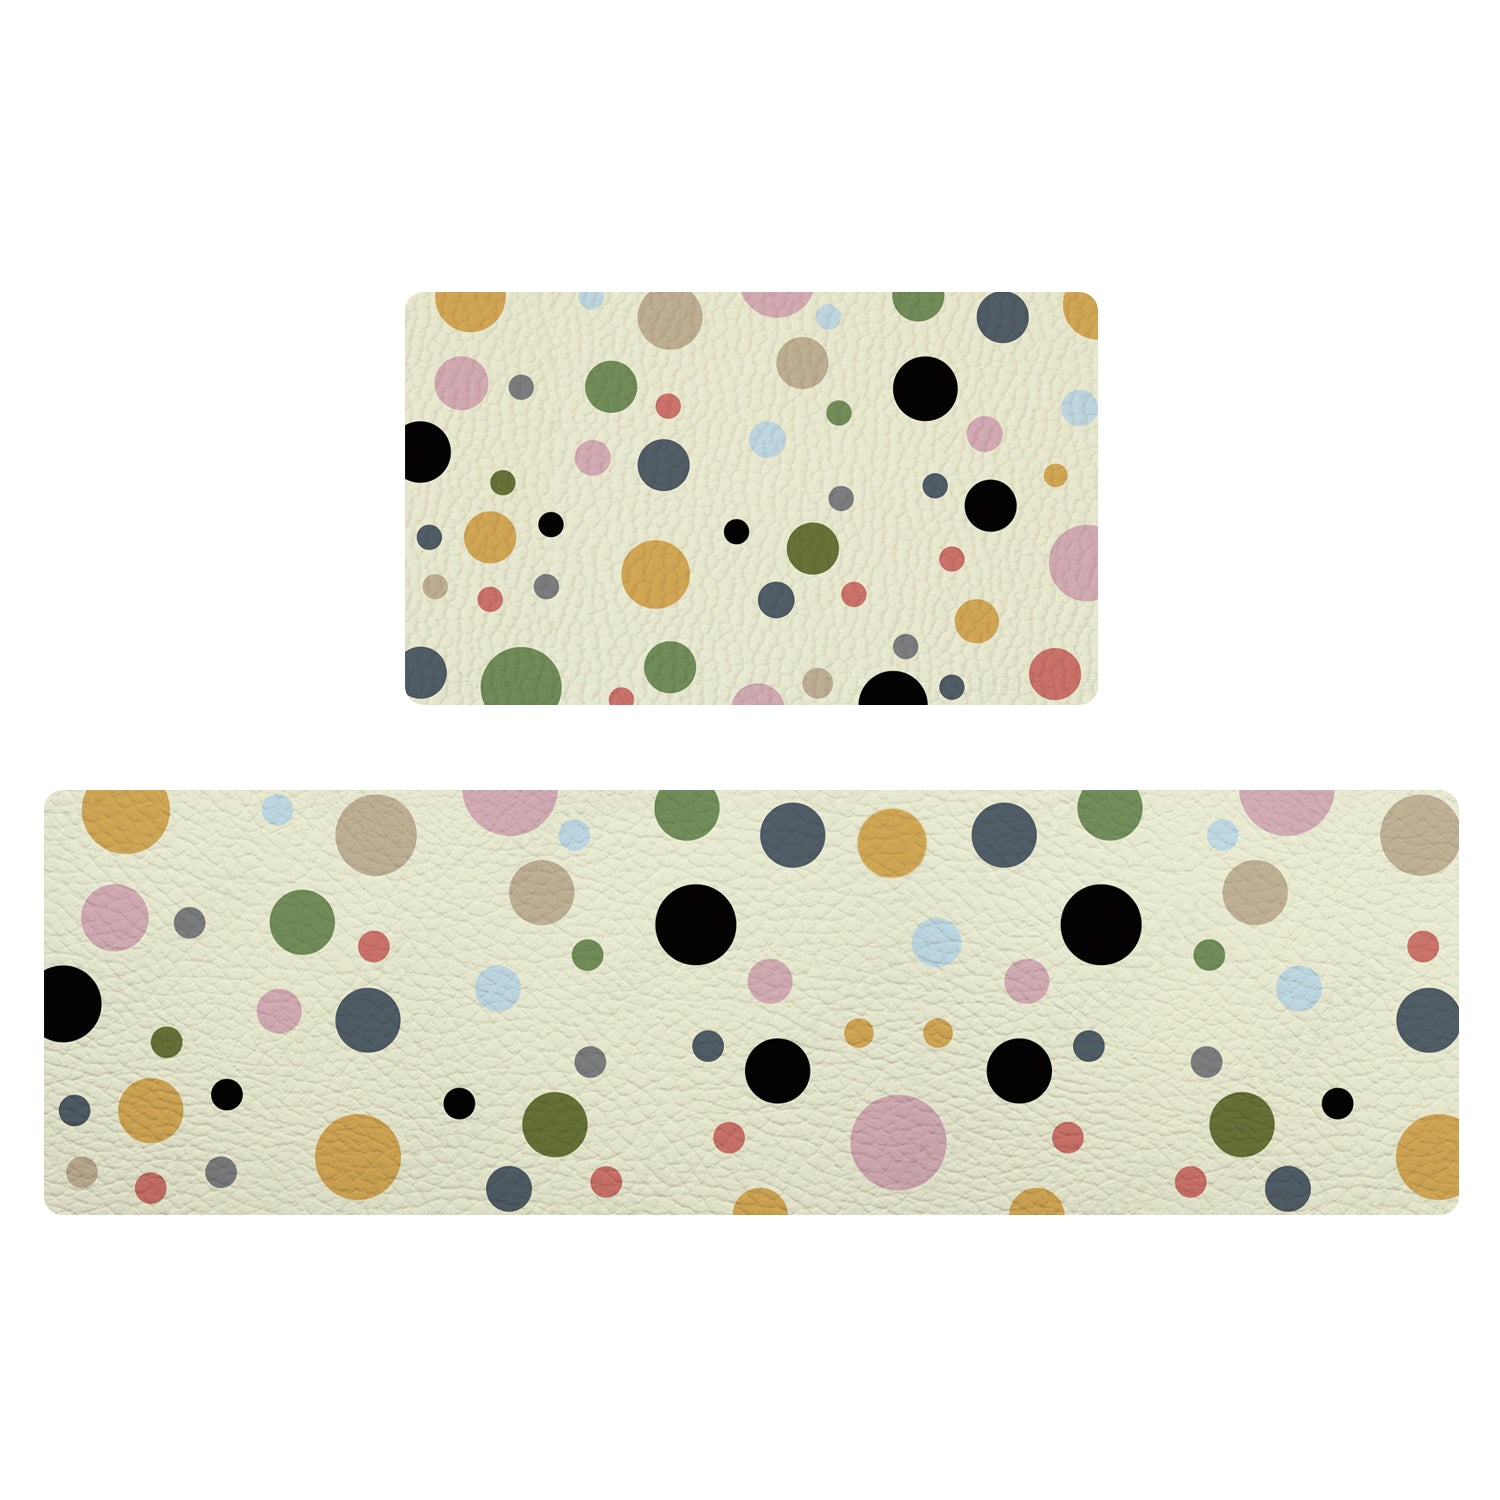 Feblilac Colorful Polka Dots PVC Leather Kitchen Mat